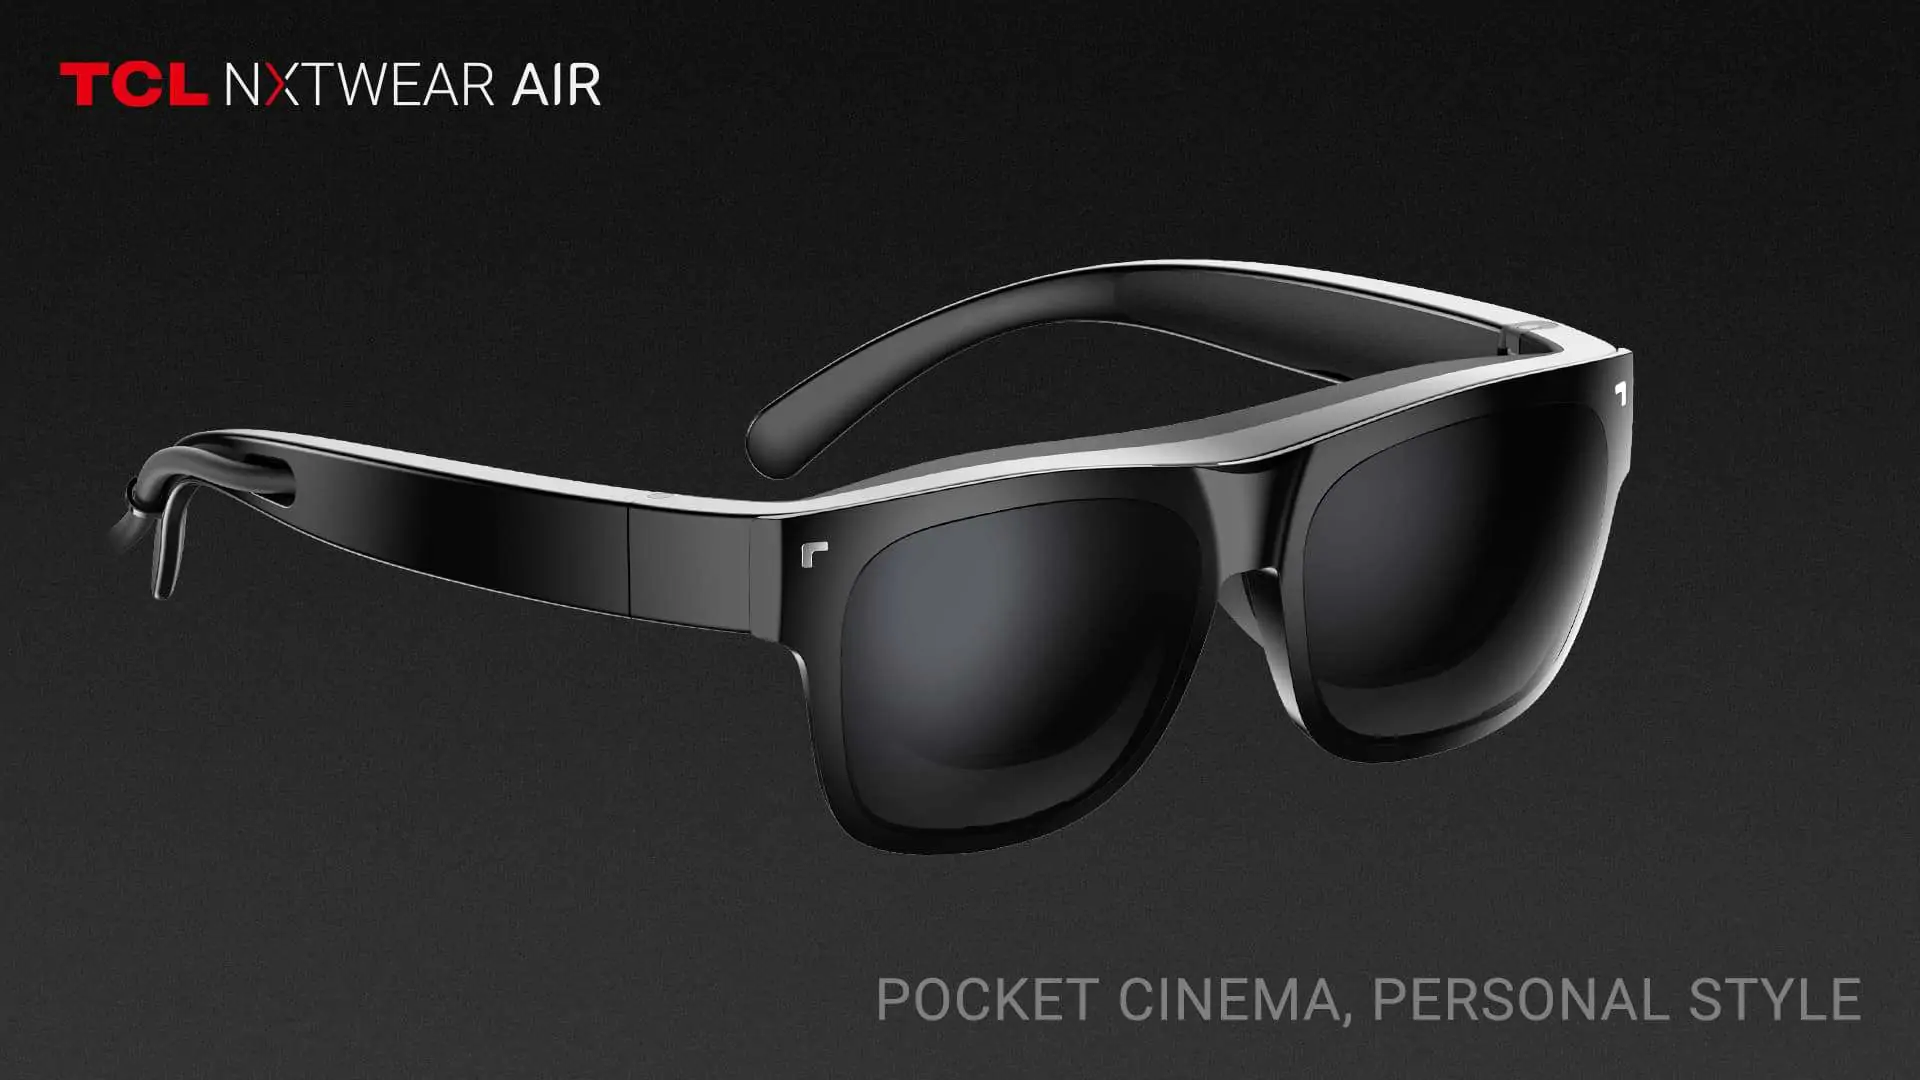 TCL NXTWEAR AIR AR智能眼镜为您带来CES 2022影院级体验